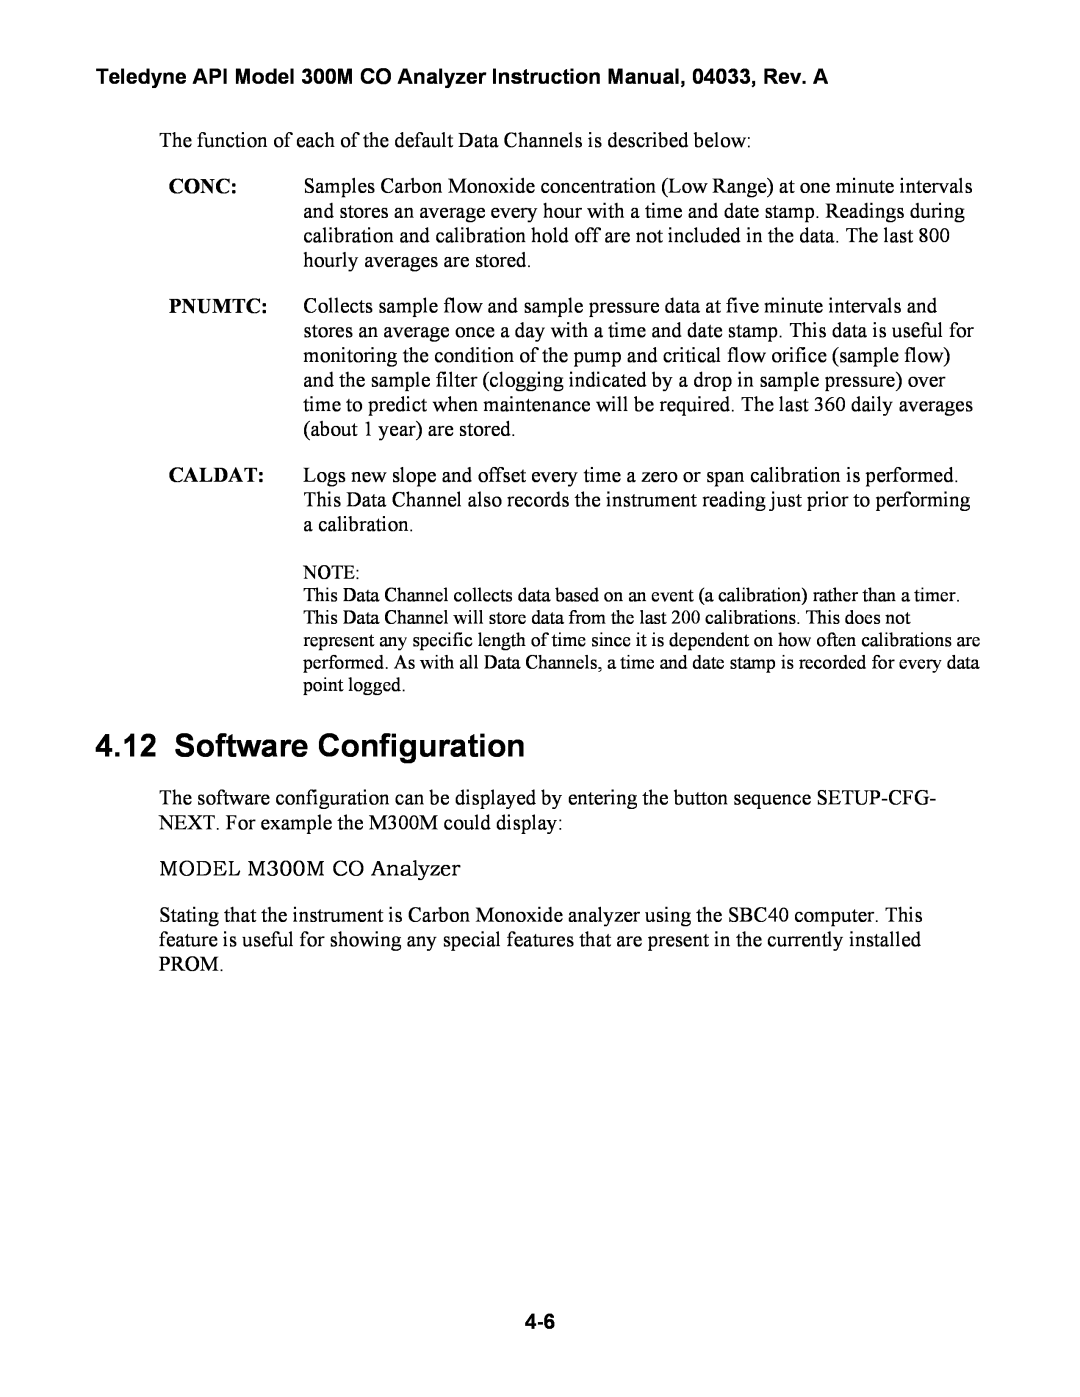 Teledyne 300M instruction manual Software Configuration 